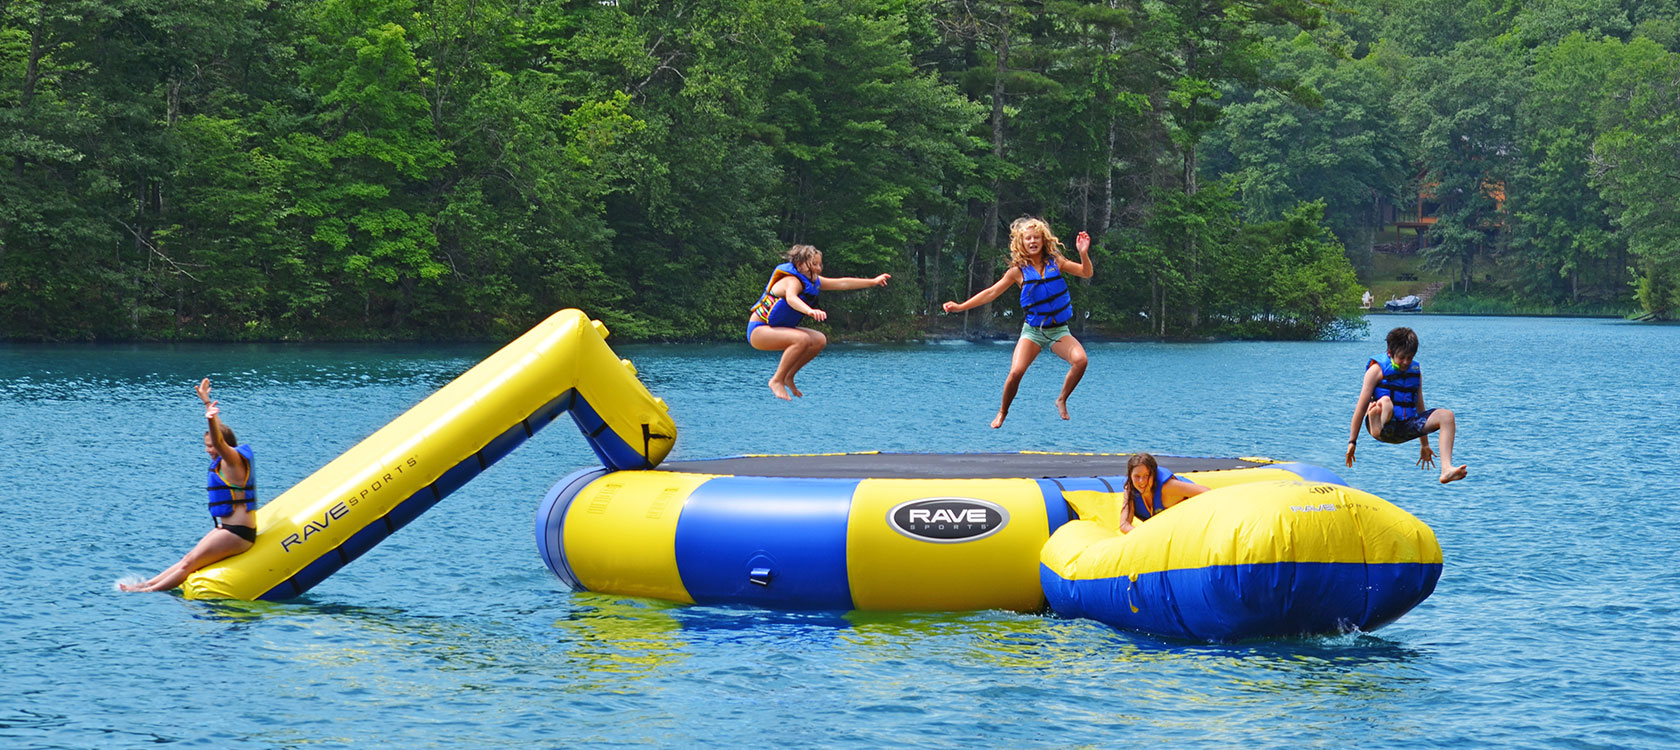 Rave Aqua Log (for water trampoline) – Ocean Sports